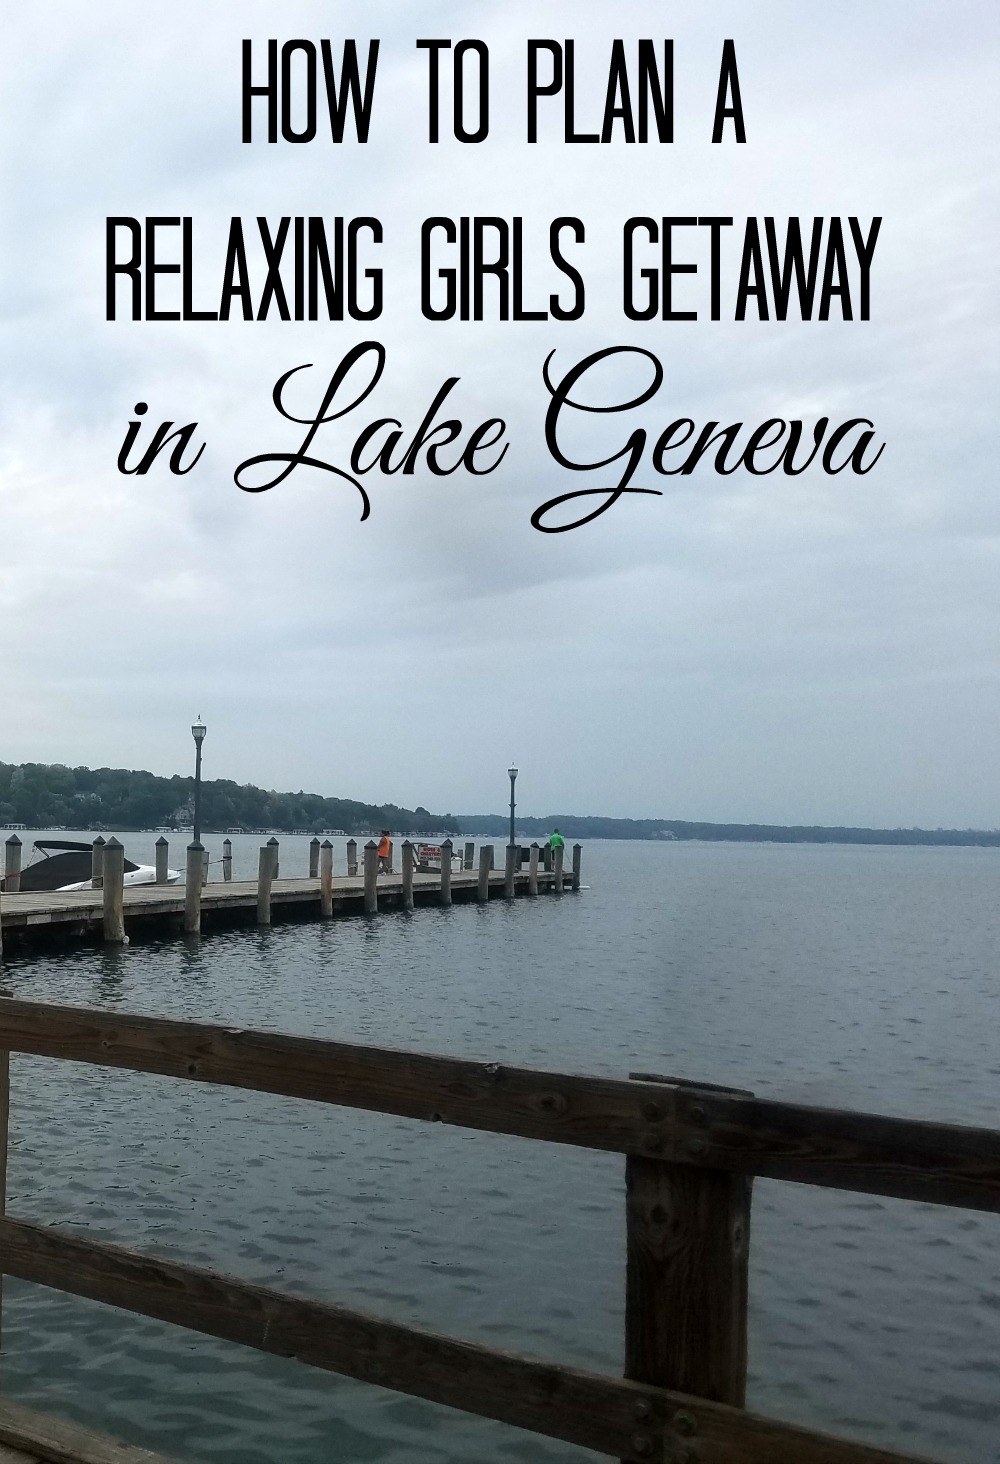 How to Plan a Relaxing Girls Getaway in Lake Geneva